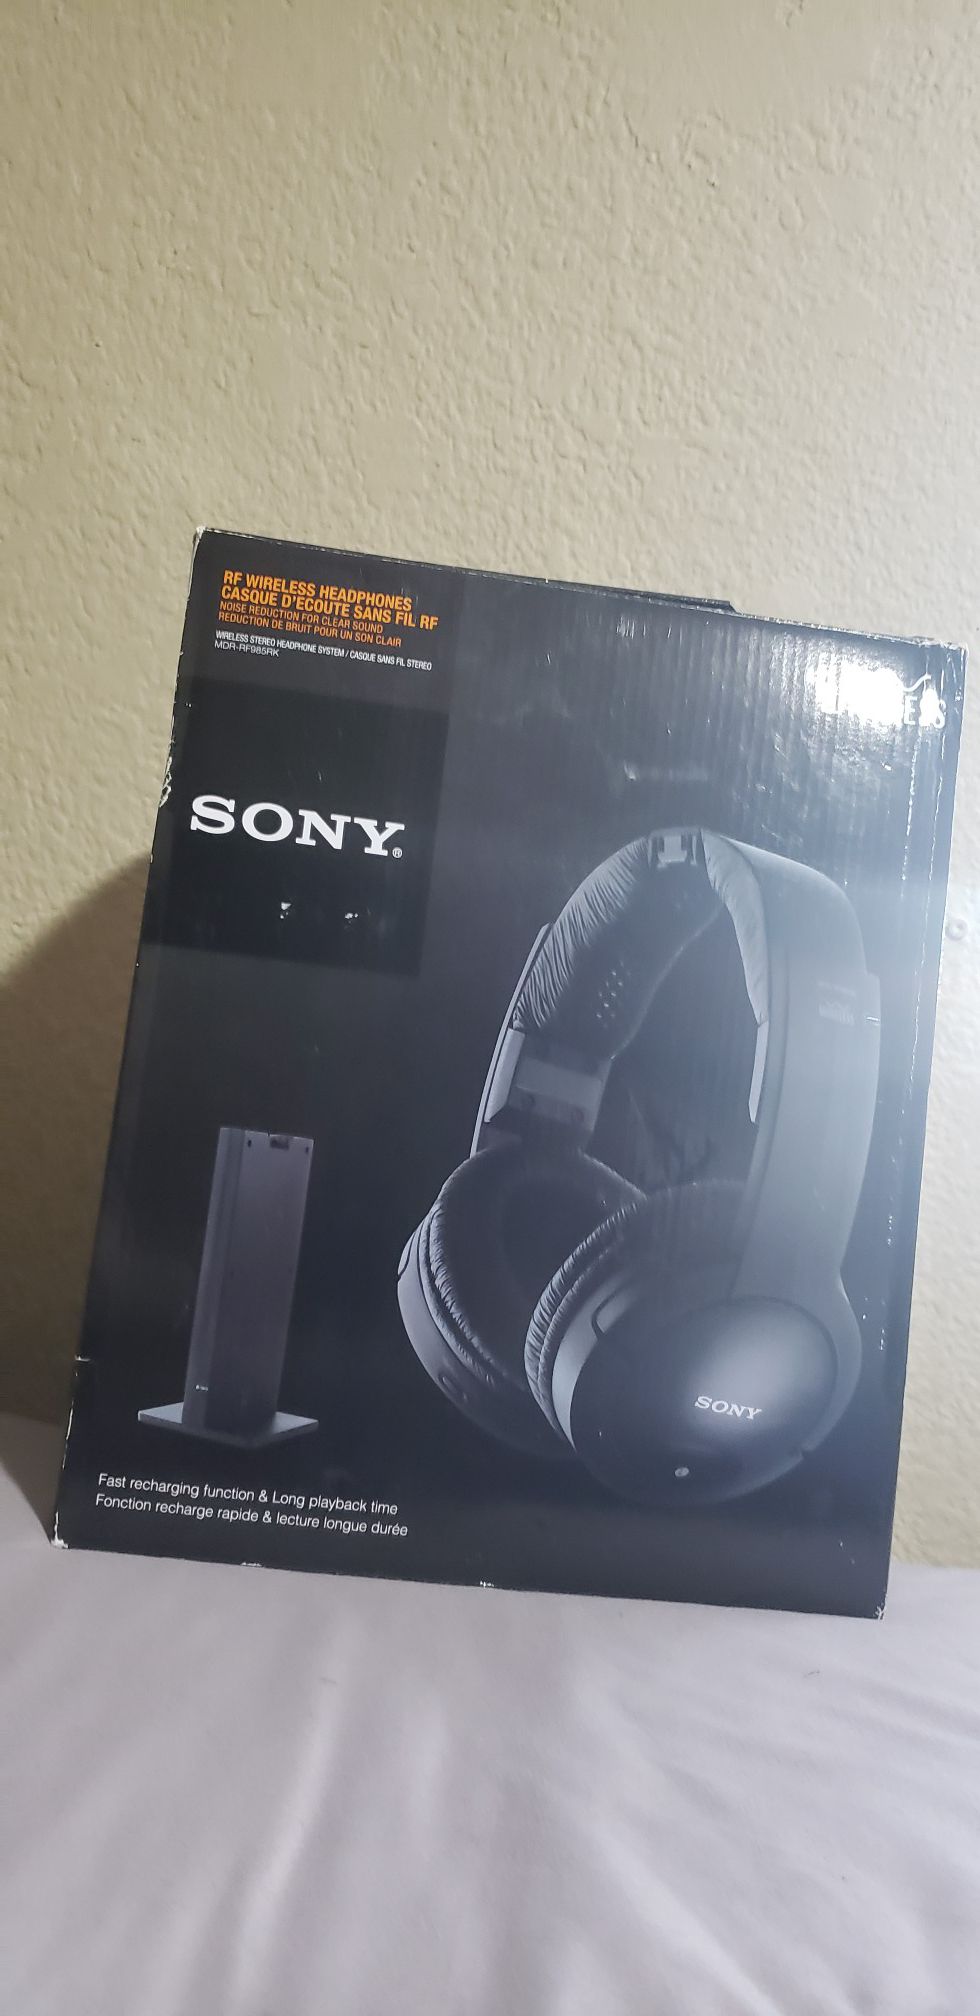 Sony wireless headphones/stereo system